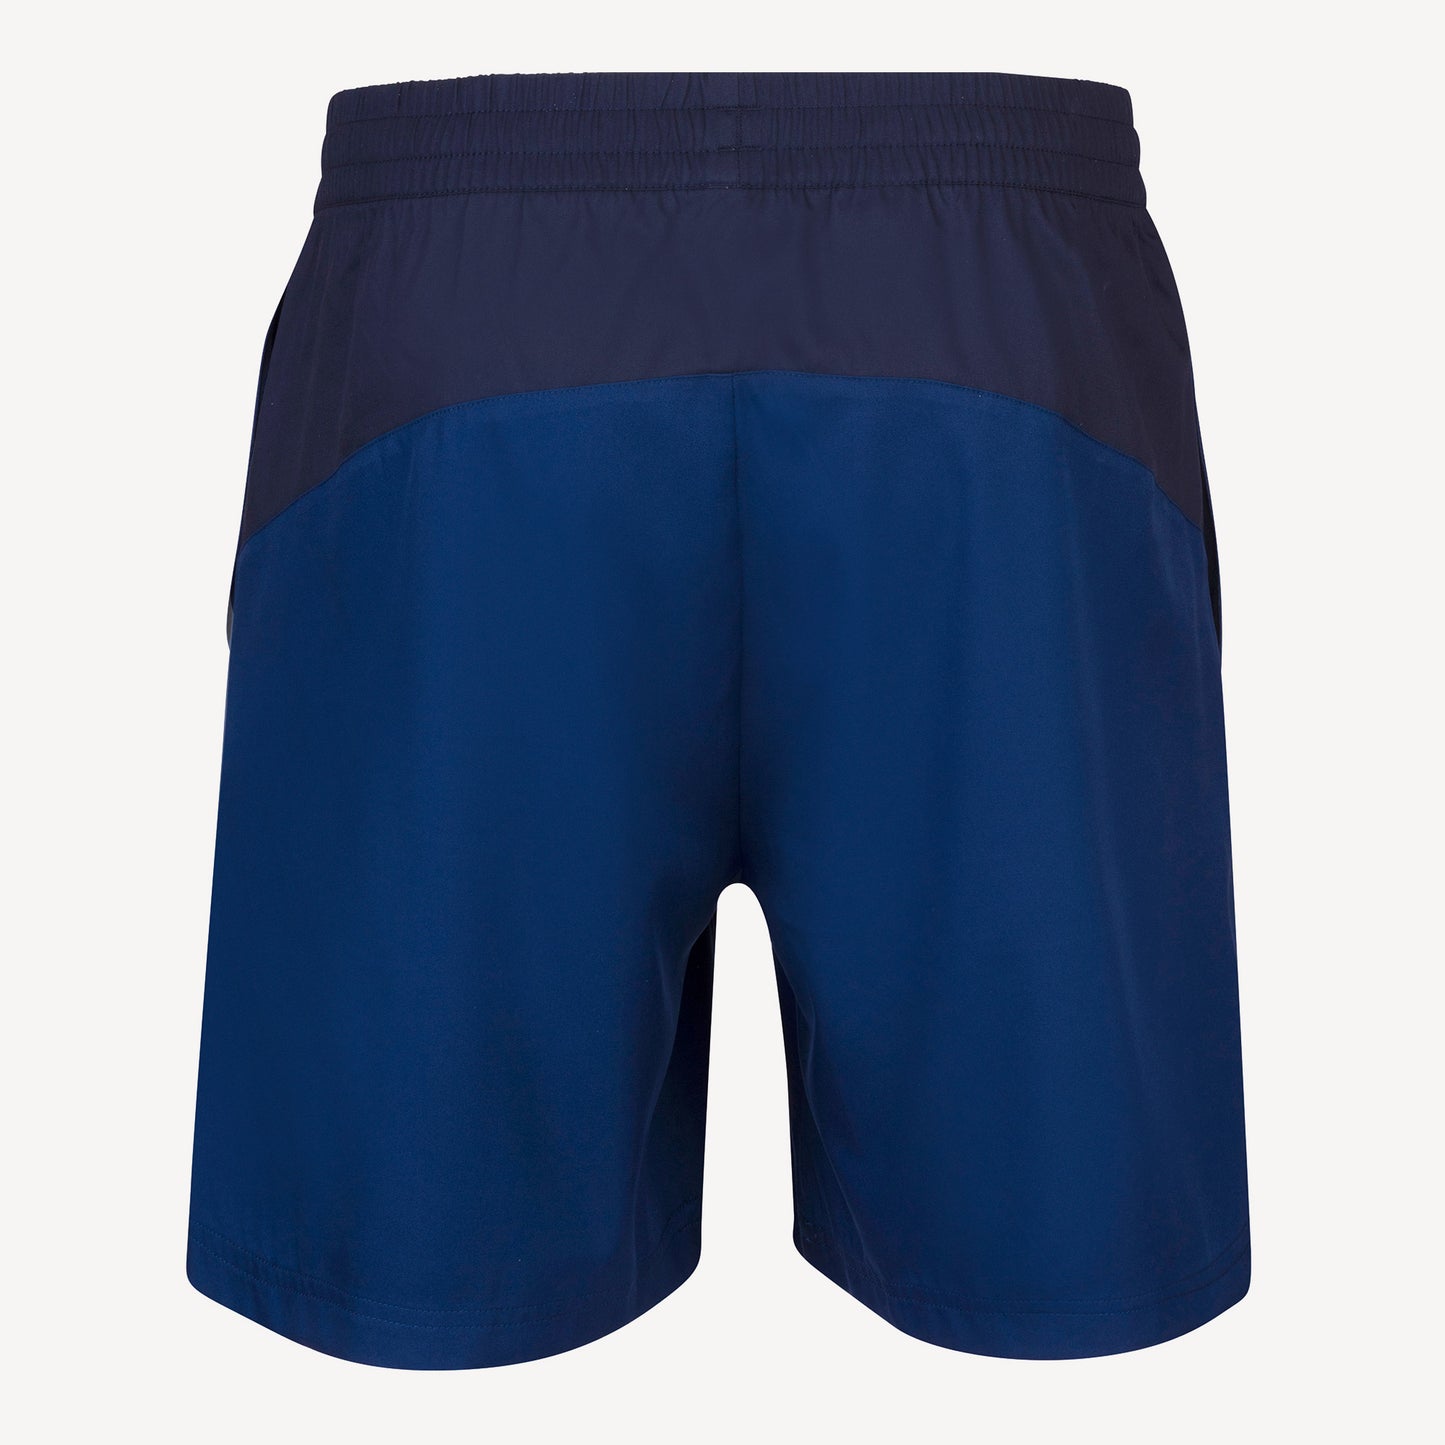 Babolat Play Club Boys' Tennis Shorts Blue (2)